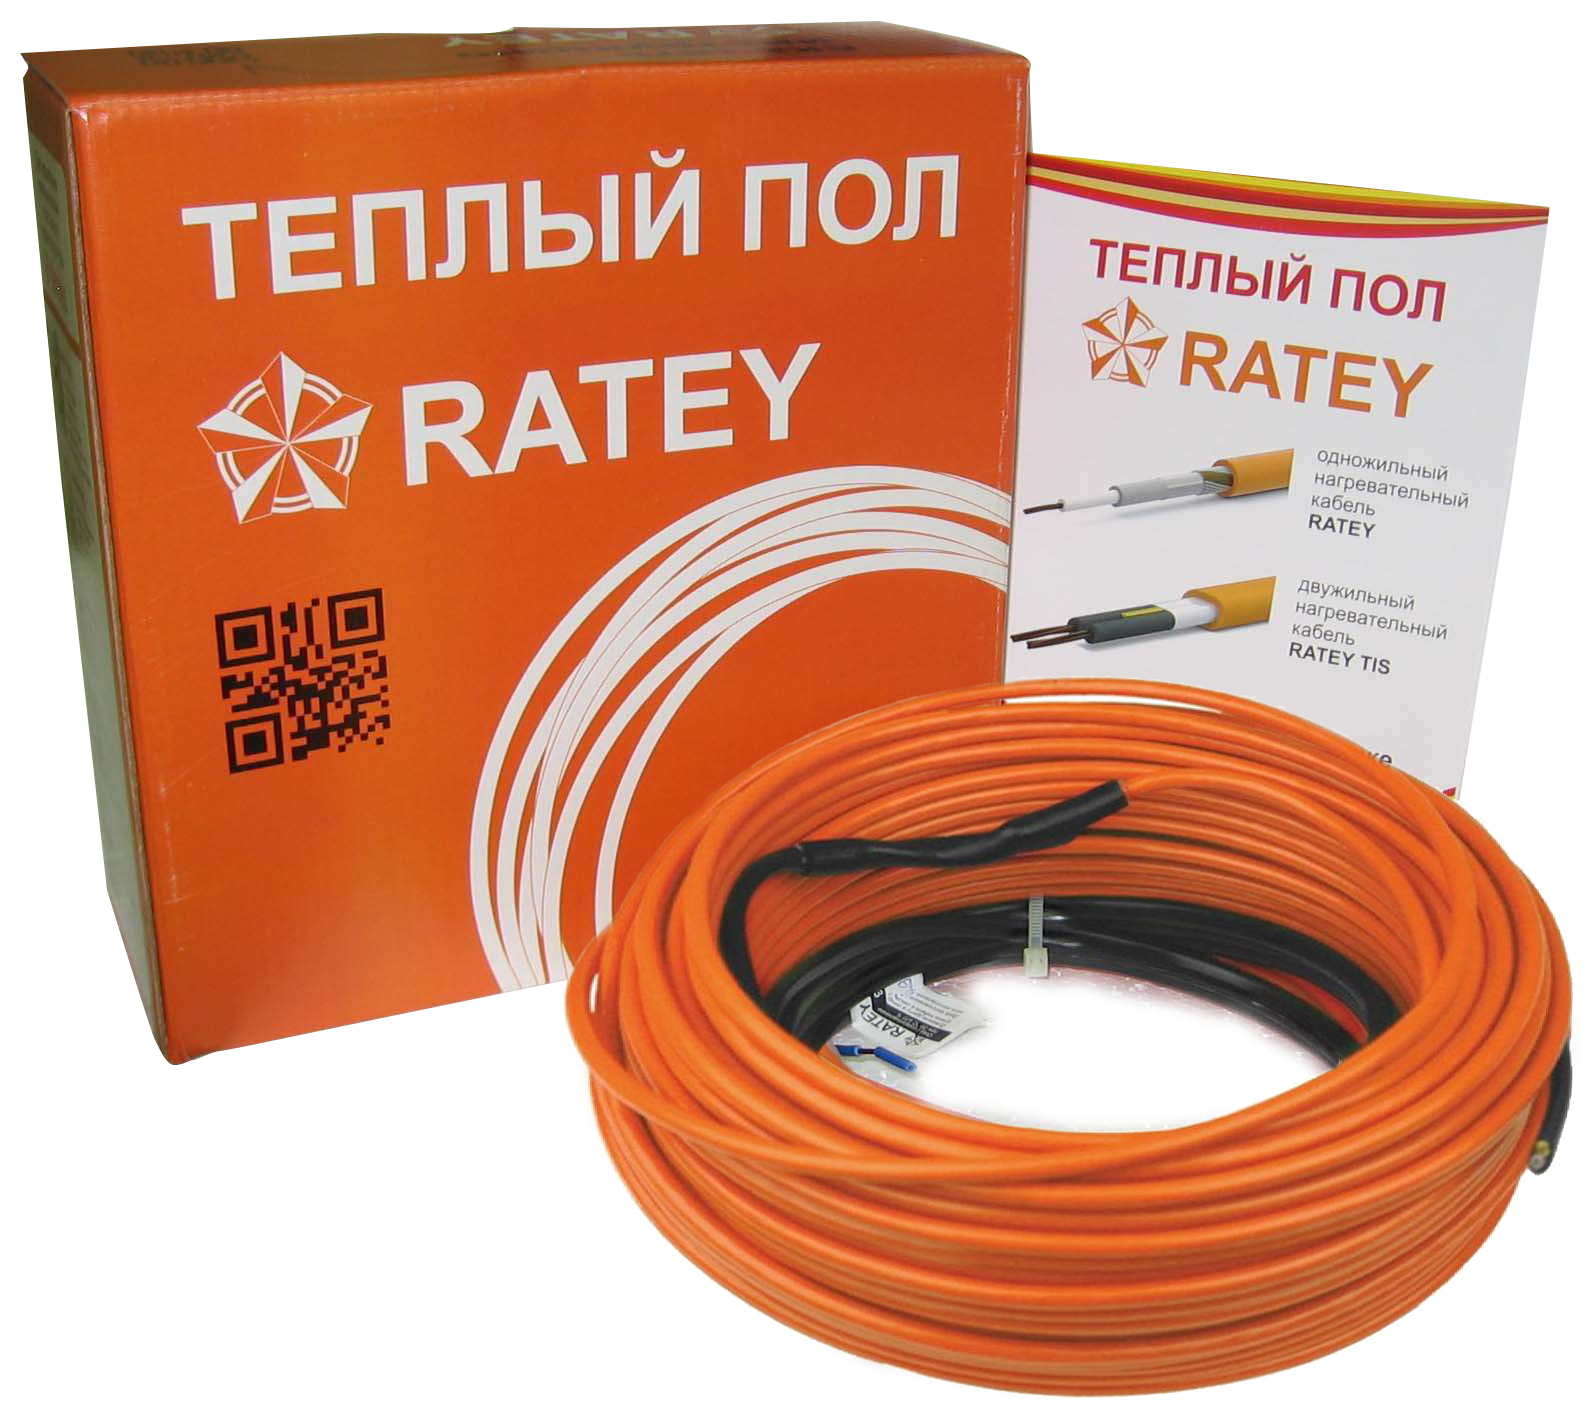 Электрический теплый пол Ratey RD1 1.700